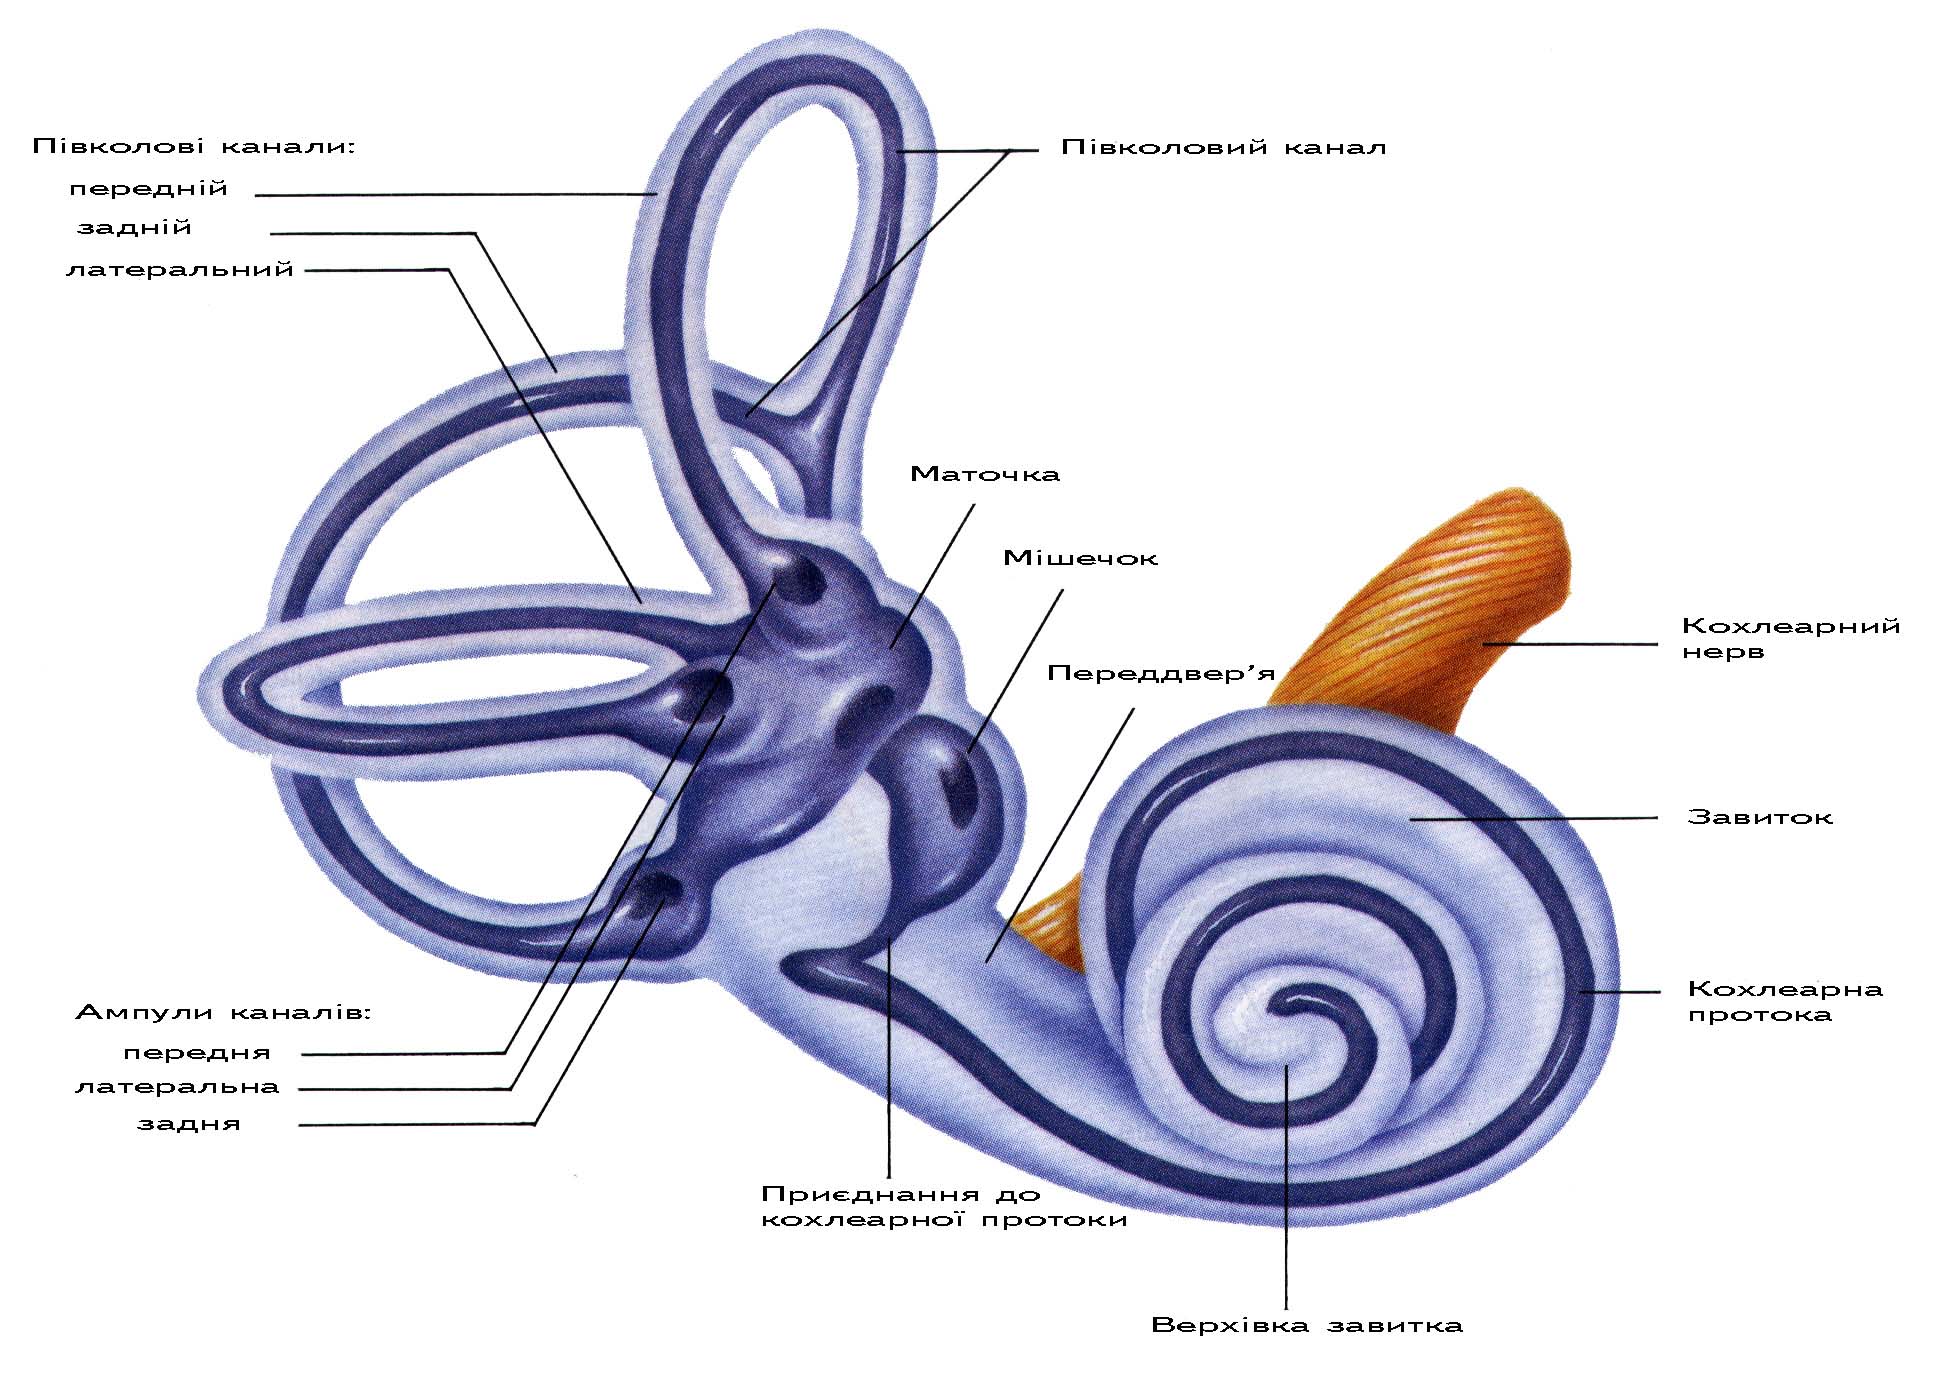 Работа вестибулярного аппарата биология 8 класс. Вестибулярный аппарат внутреннего уха строение. Внутреннее ухо вестибулярный аппарат. Строение улитки и вестибулярного аппарата. Улитка вестибулярный аппарат.